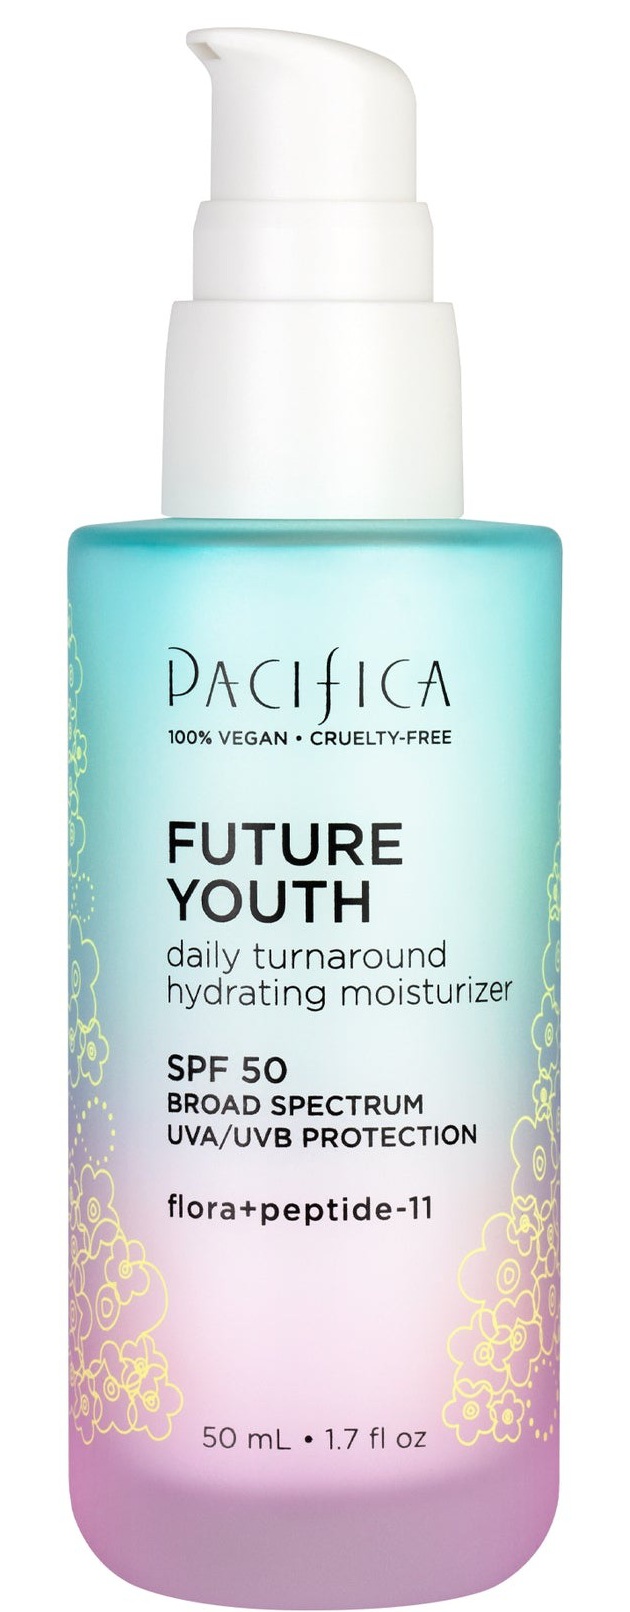 Pacifica Future Youth Daily Turnaround Hydrating Moisturizer SPF 50